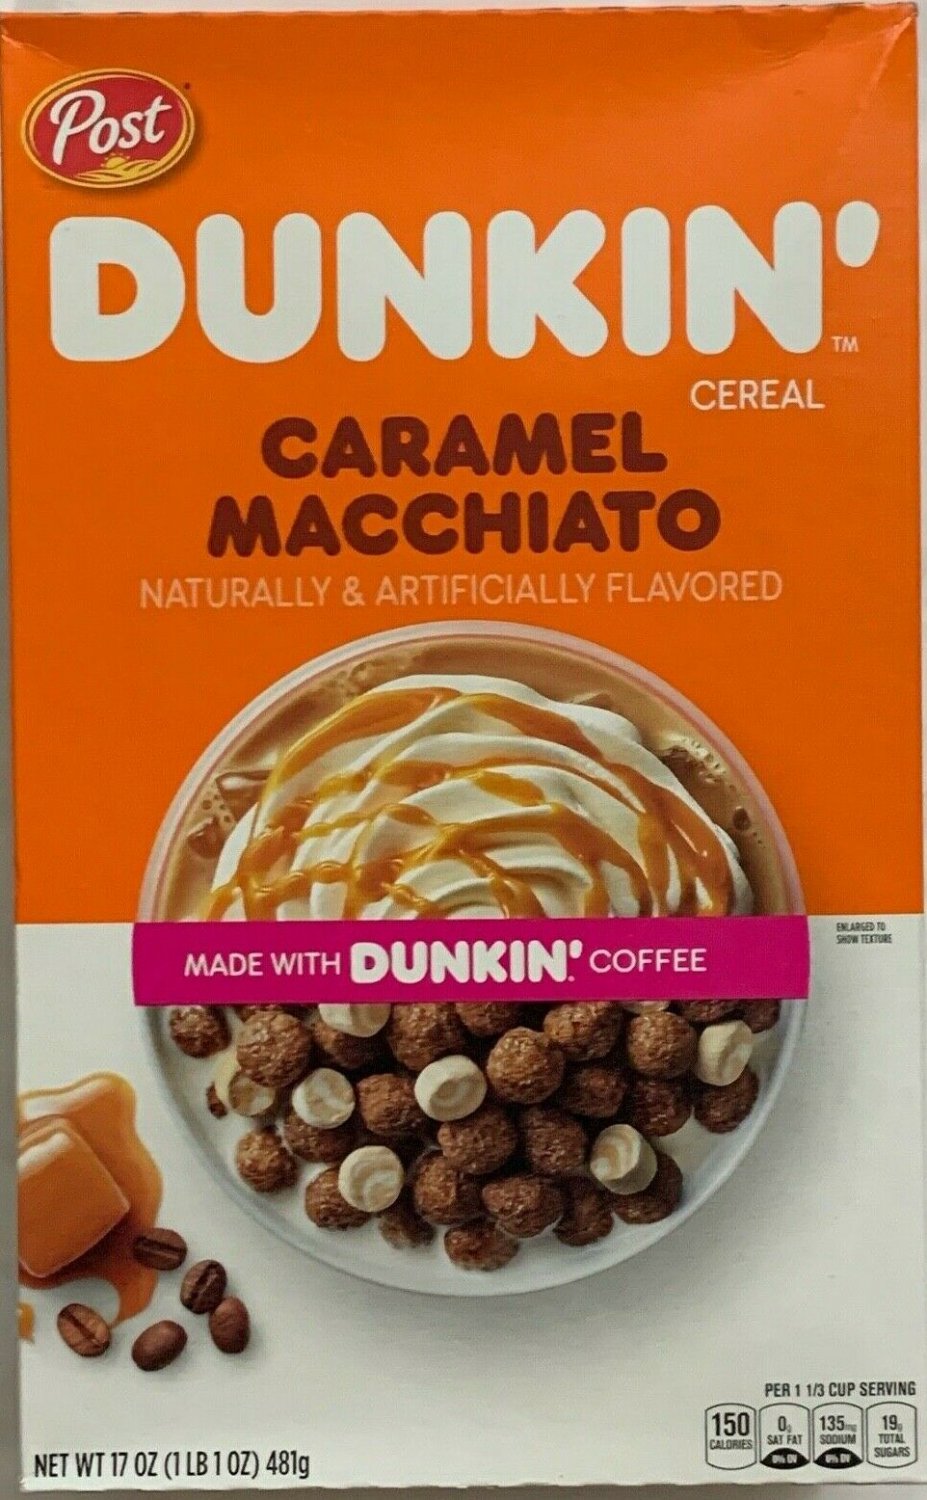 caffeine in dunkin donuts caramel macchiato